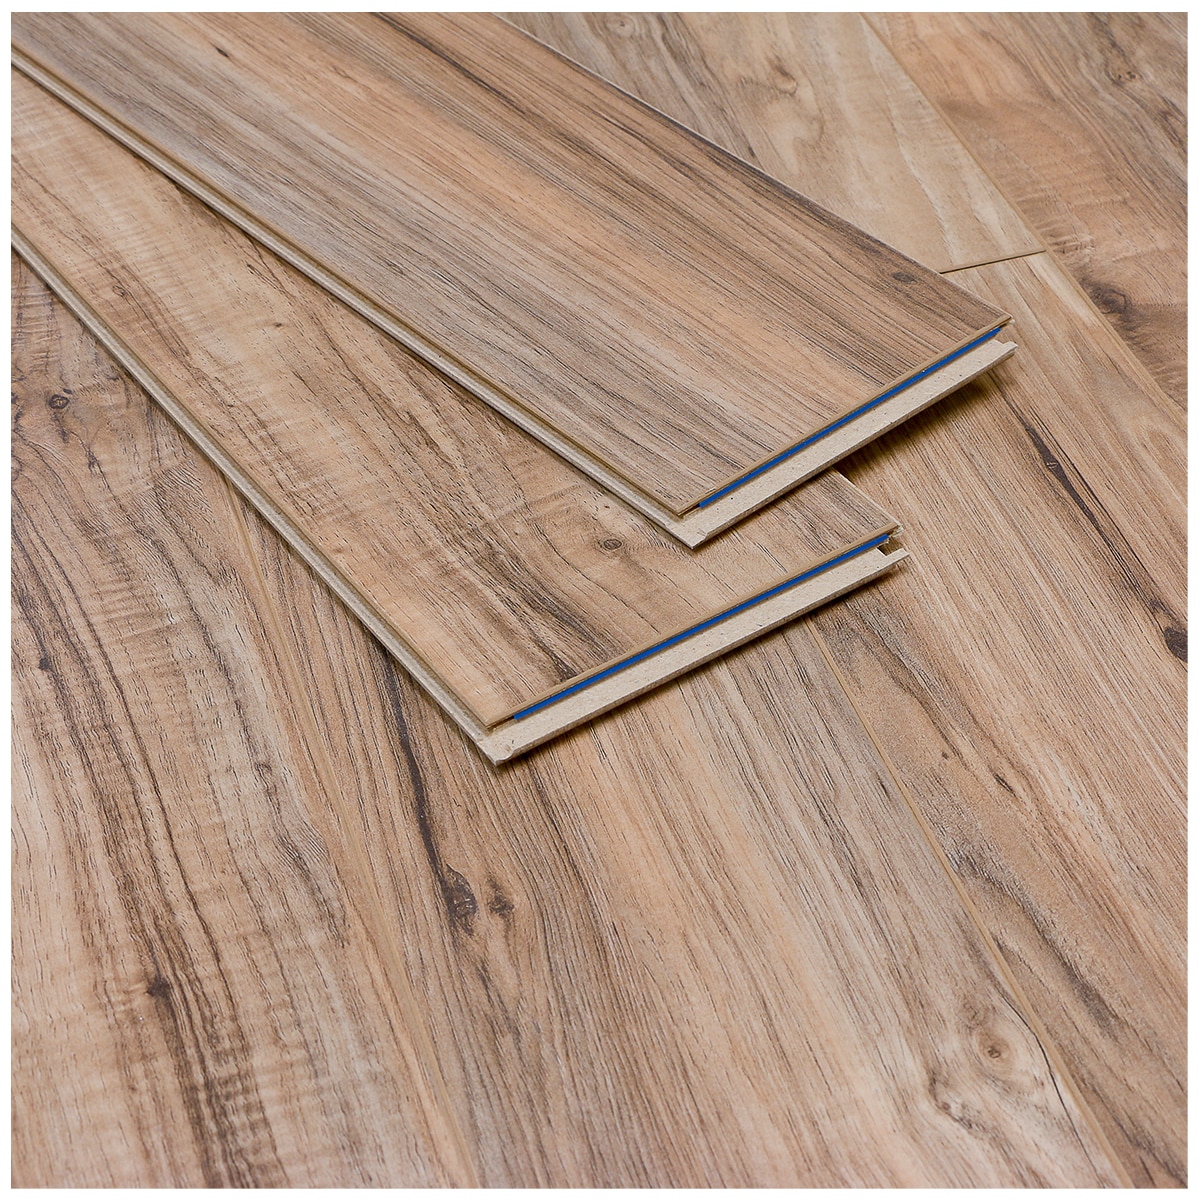 Golden Select Laminate Flooring Toledo 1.16 M²/Box